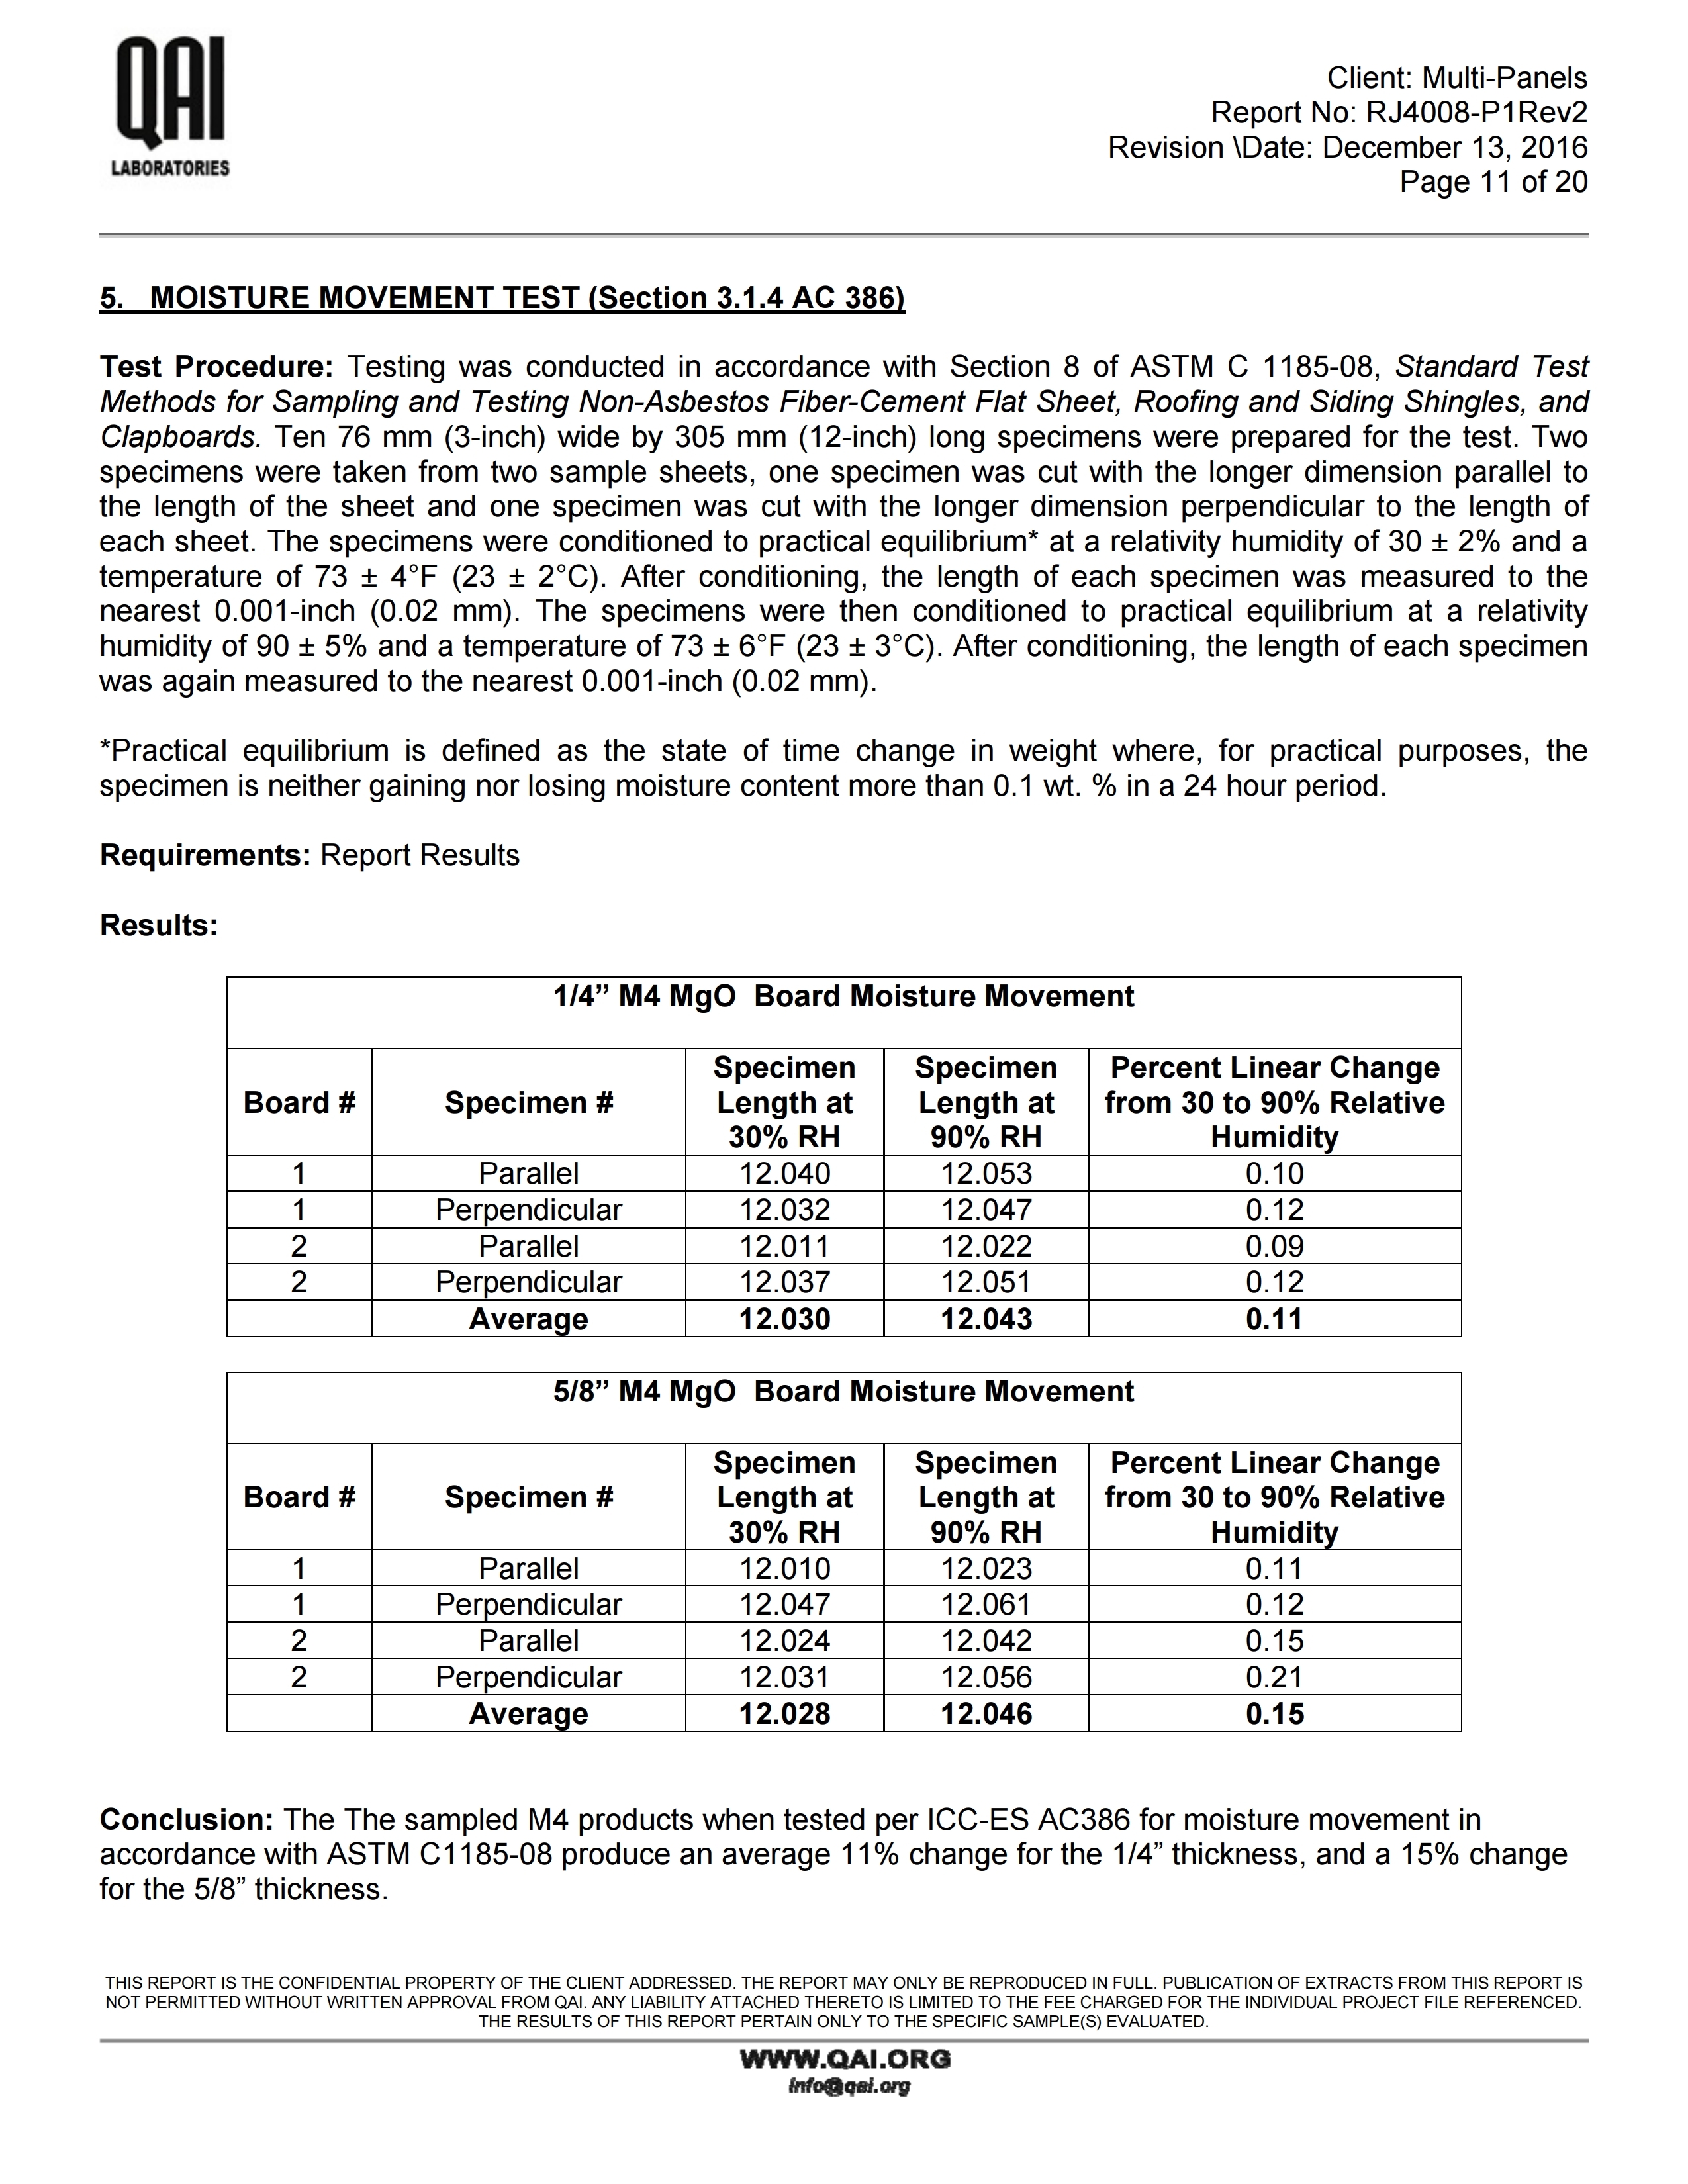 RJ4008-P1REV2-Multi-Panels-M4-AC386 Report-13122016 (2).pdf_page_11.jpg